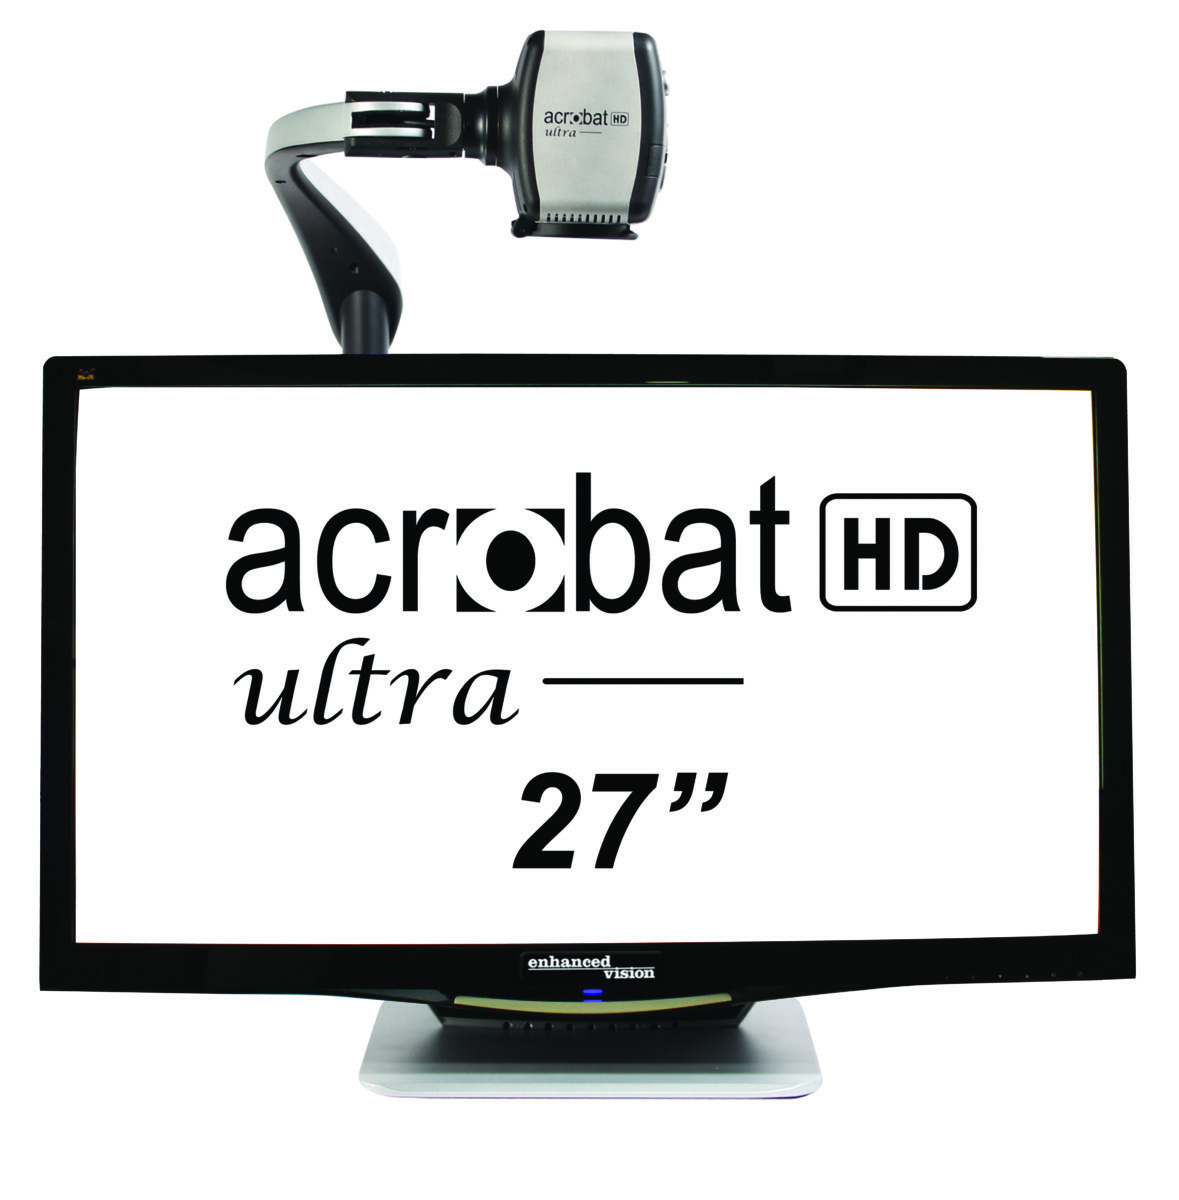 Acrobat 24 HD Ultra+case